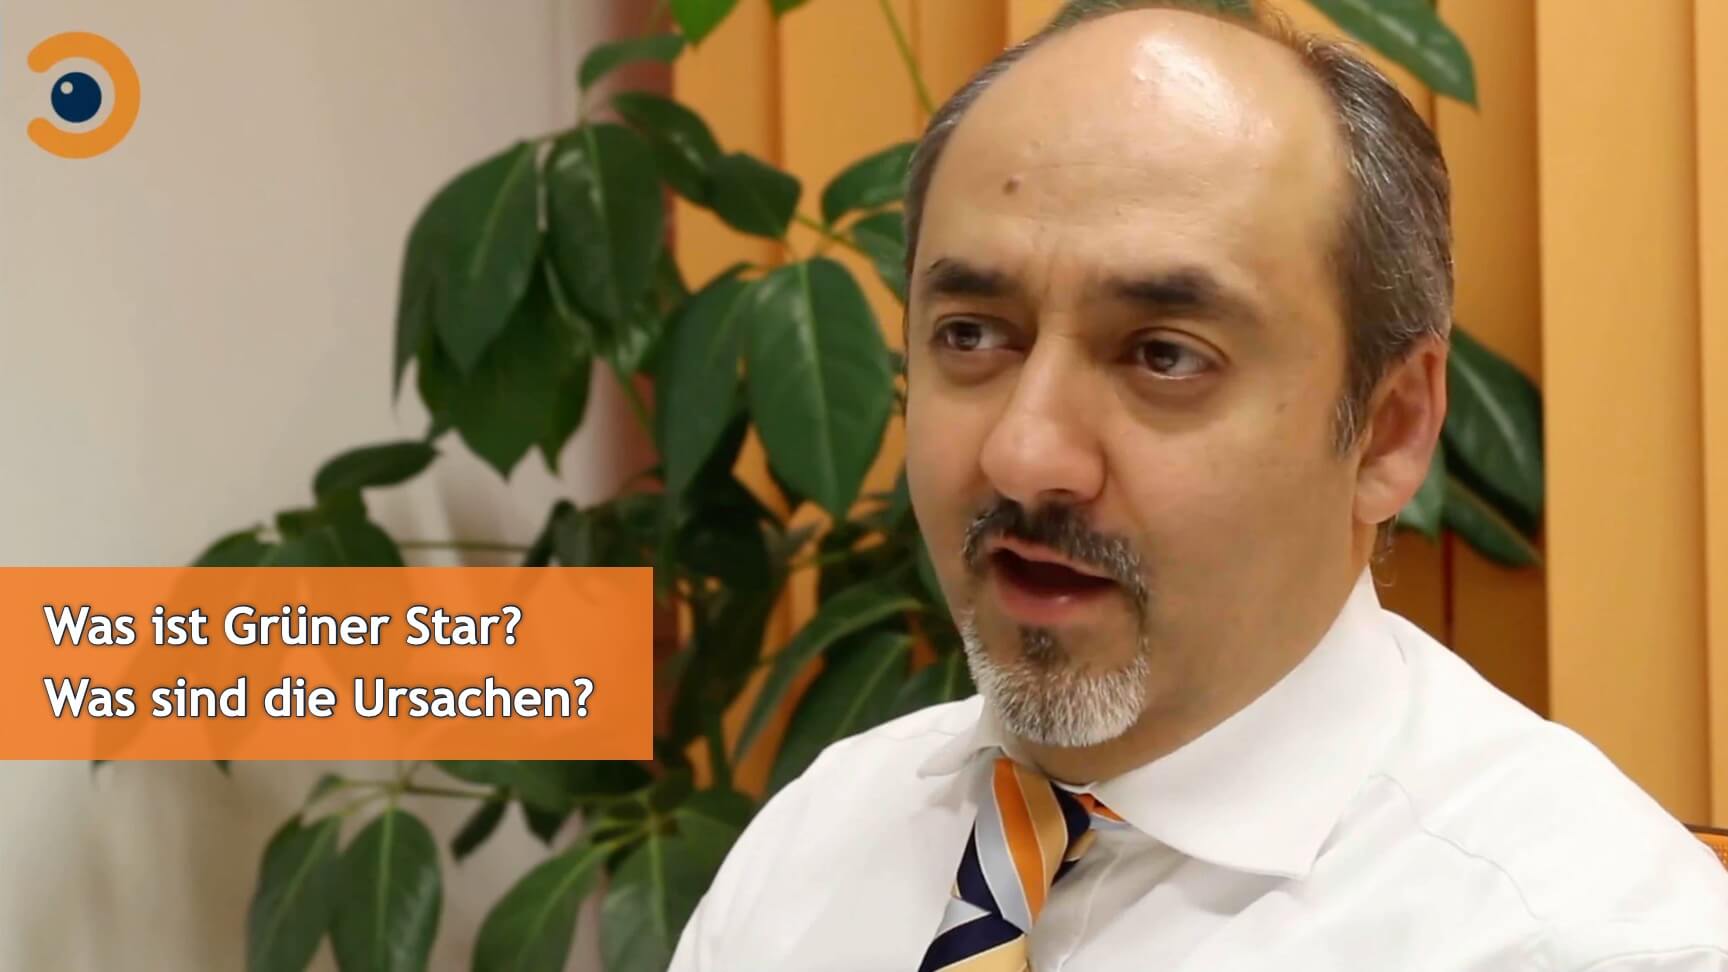 Was ist grüner Star? Dr. med. Parasta erklärt den grünen Star.